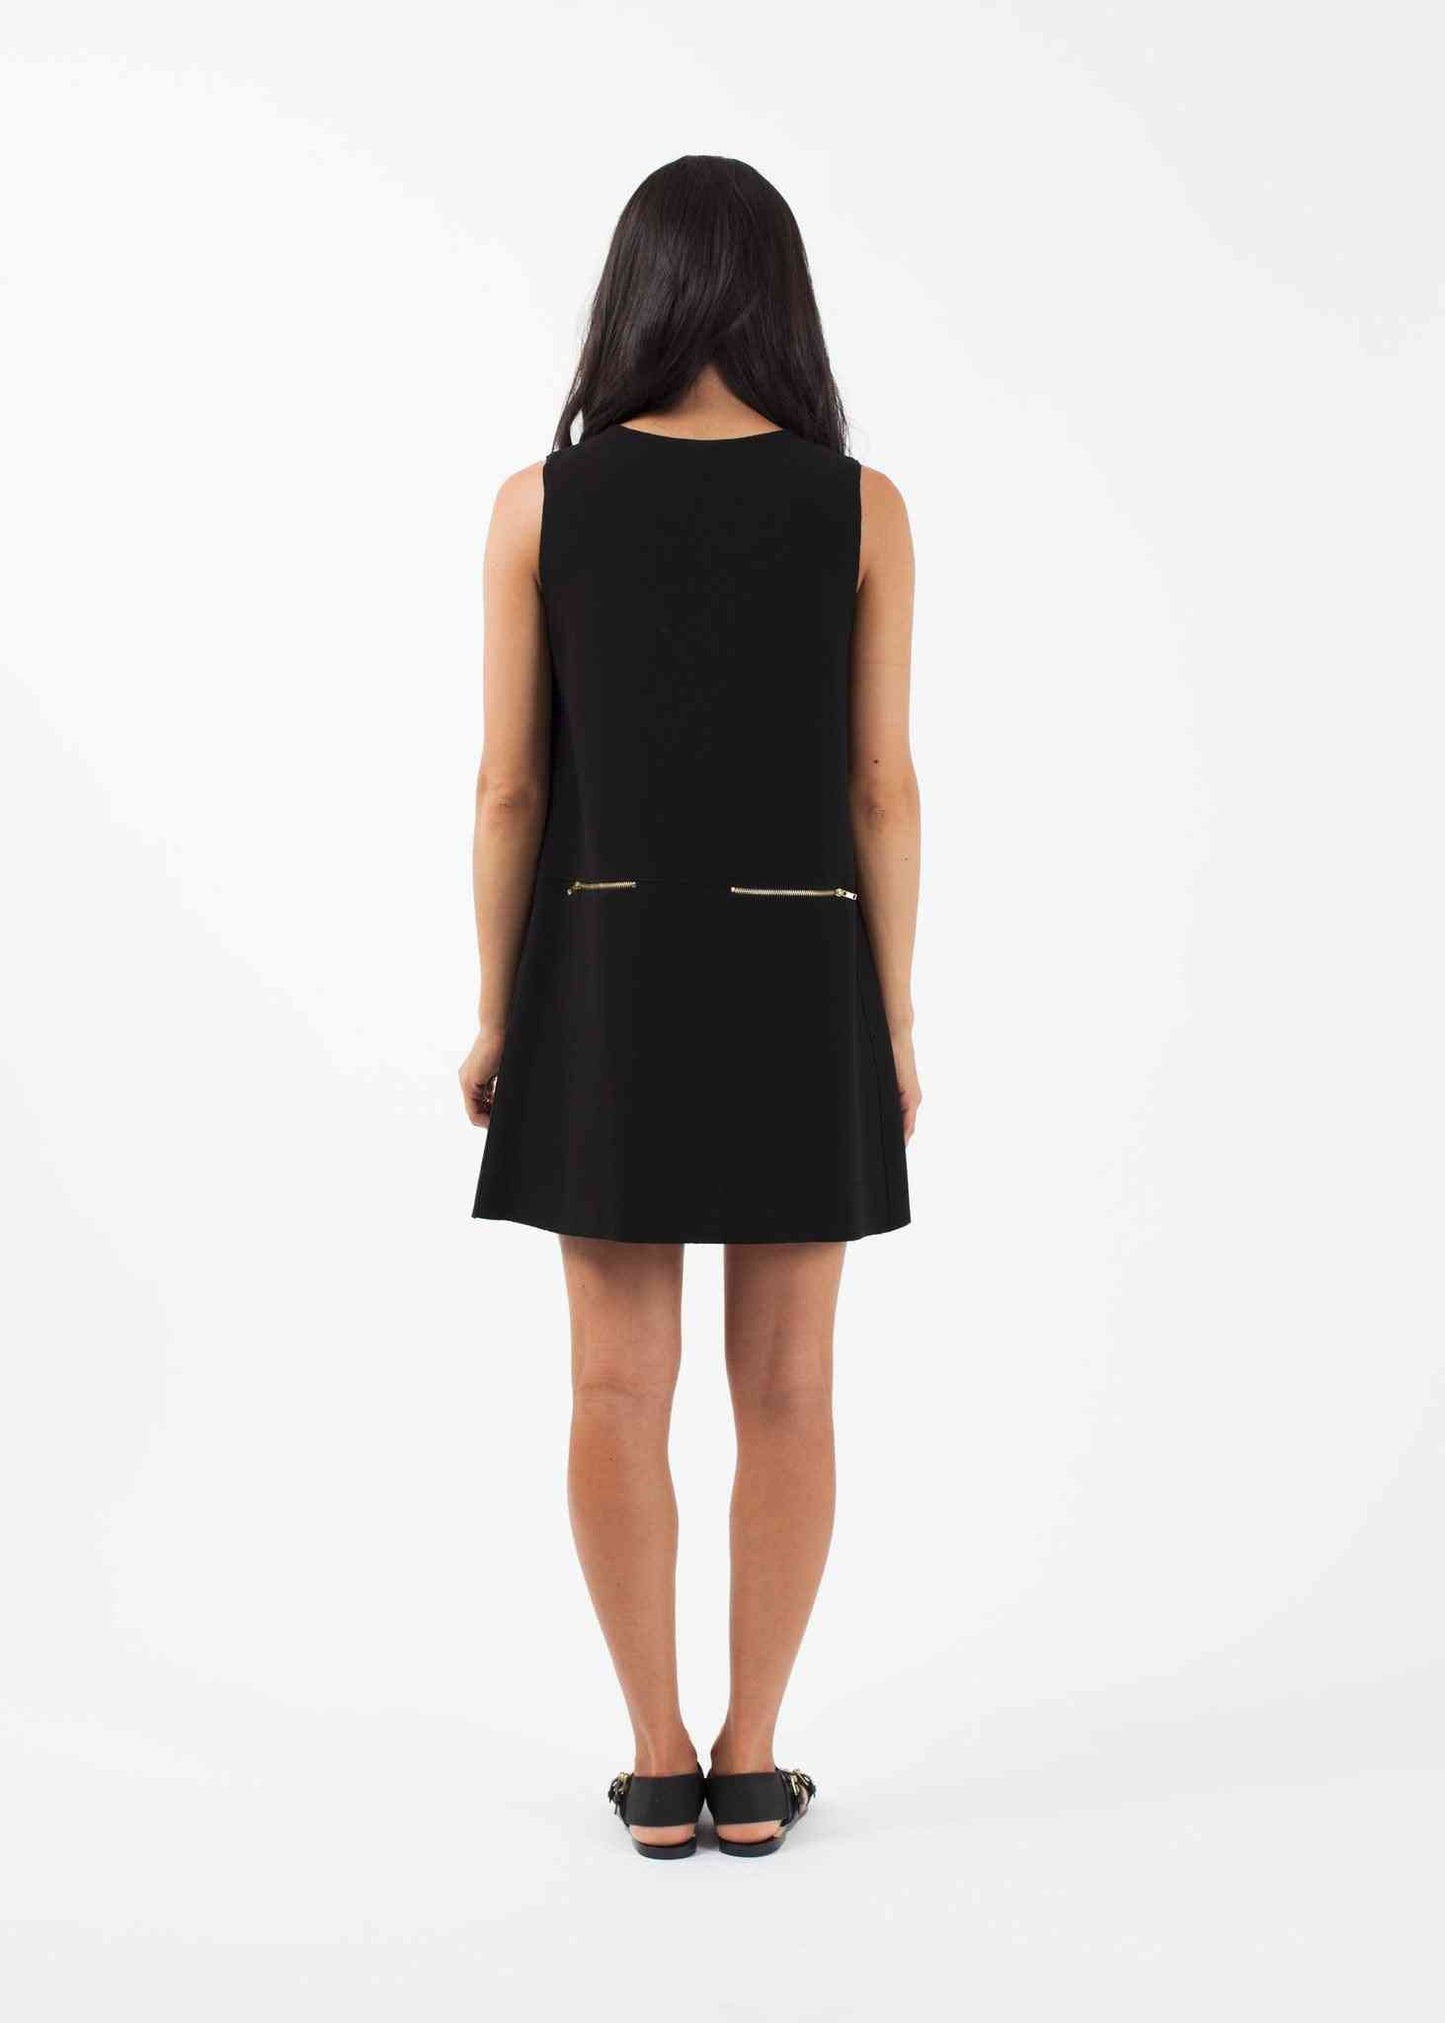 Sleeveless Dress Harvey Faircloth women's dresses Black 2 7572880809